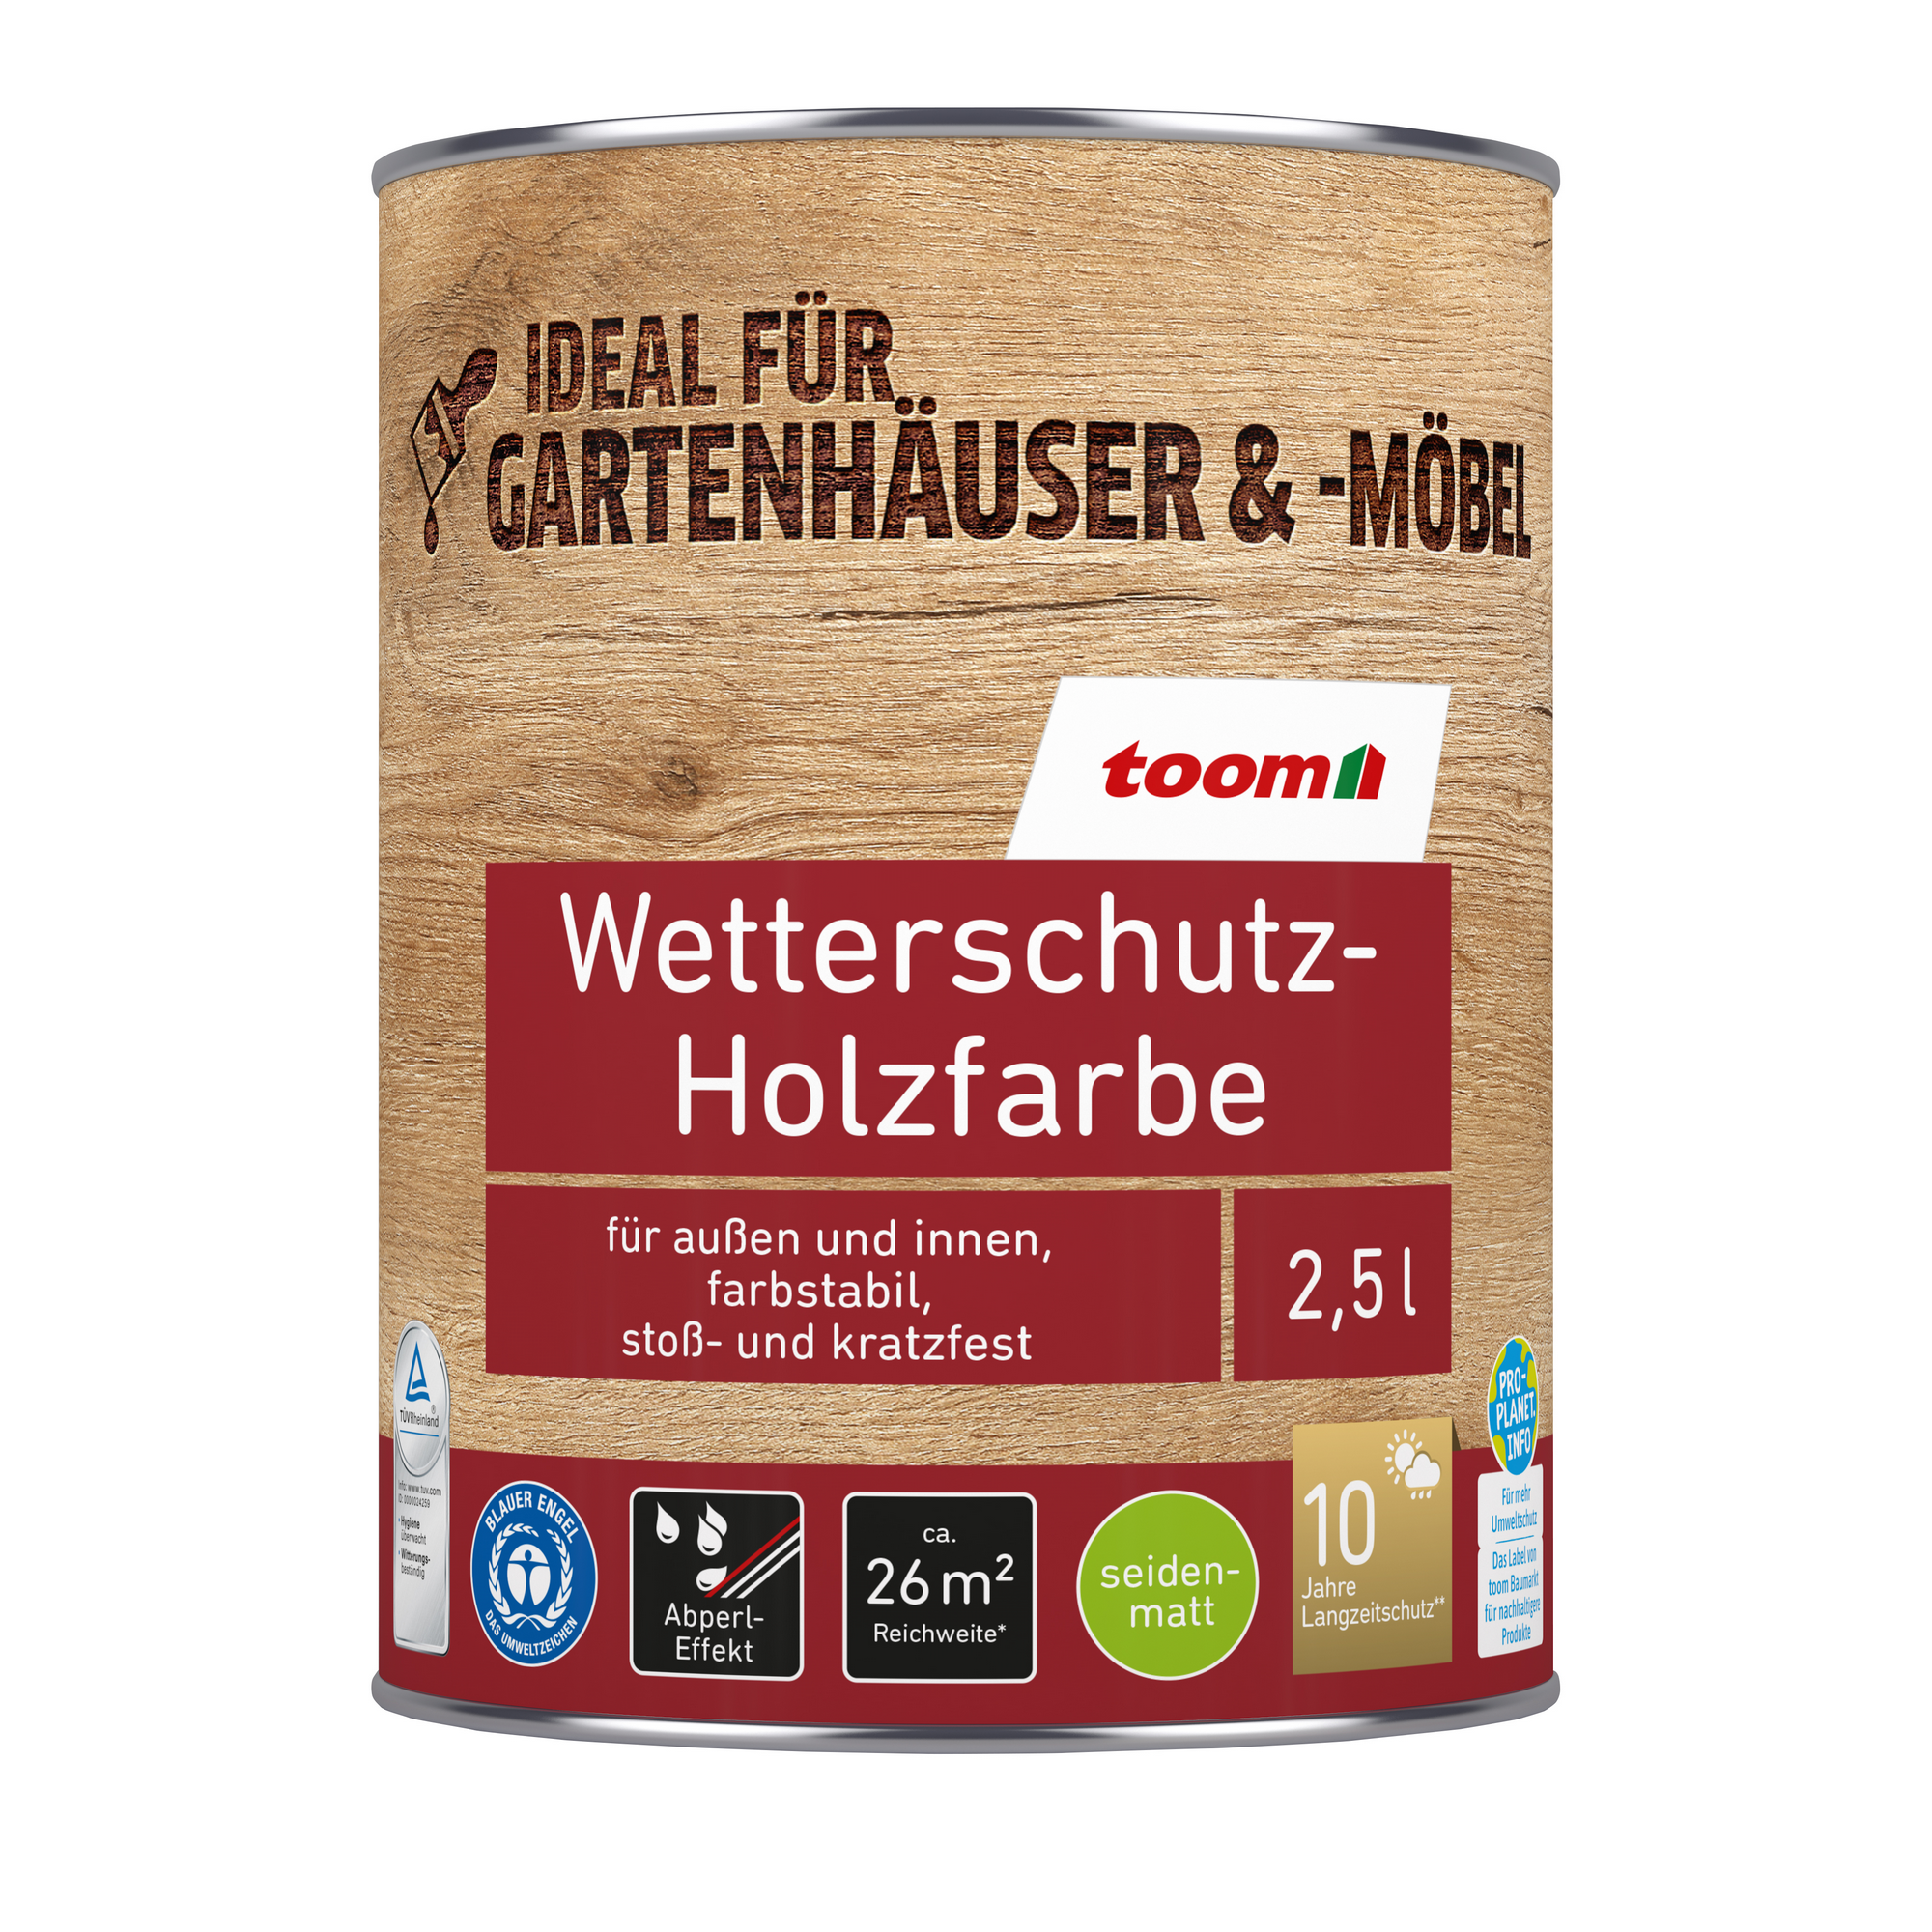 Wetterschutz-Holzfarbe taubenblau 2,5 l + product video